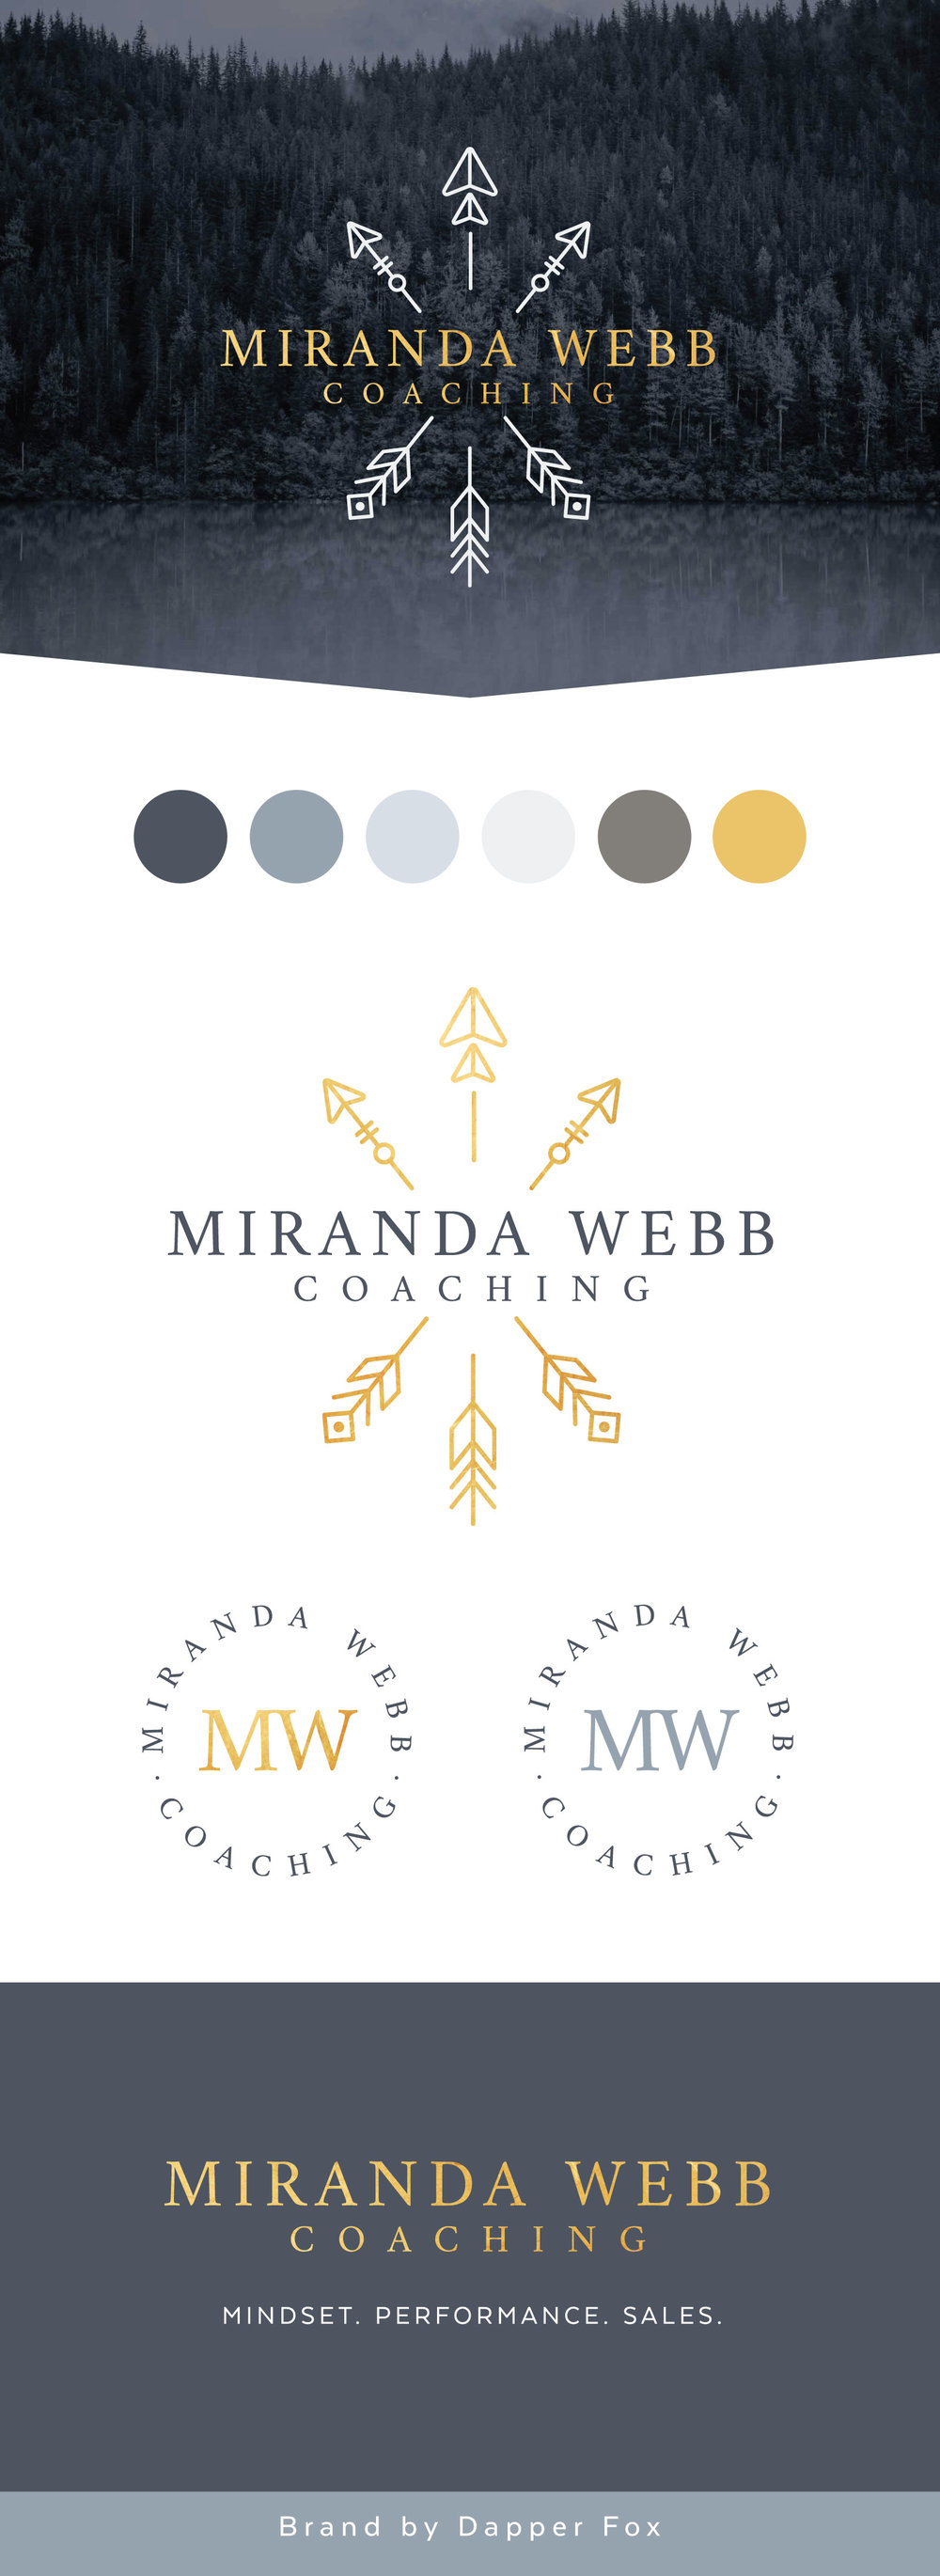 Miranda Webb Coaching Business Coach Logo and Brand Design - Arrow, Gold, Grey Color Scheme Modern Logo Design